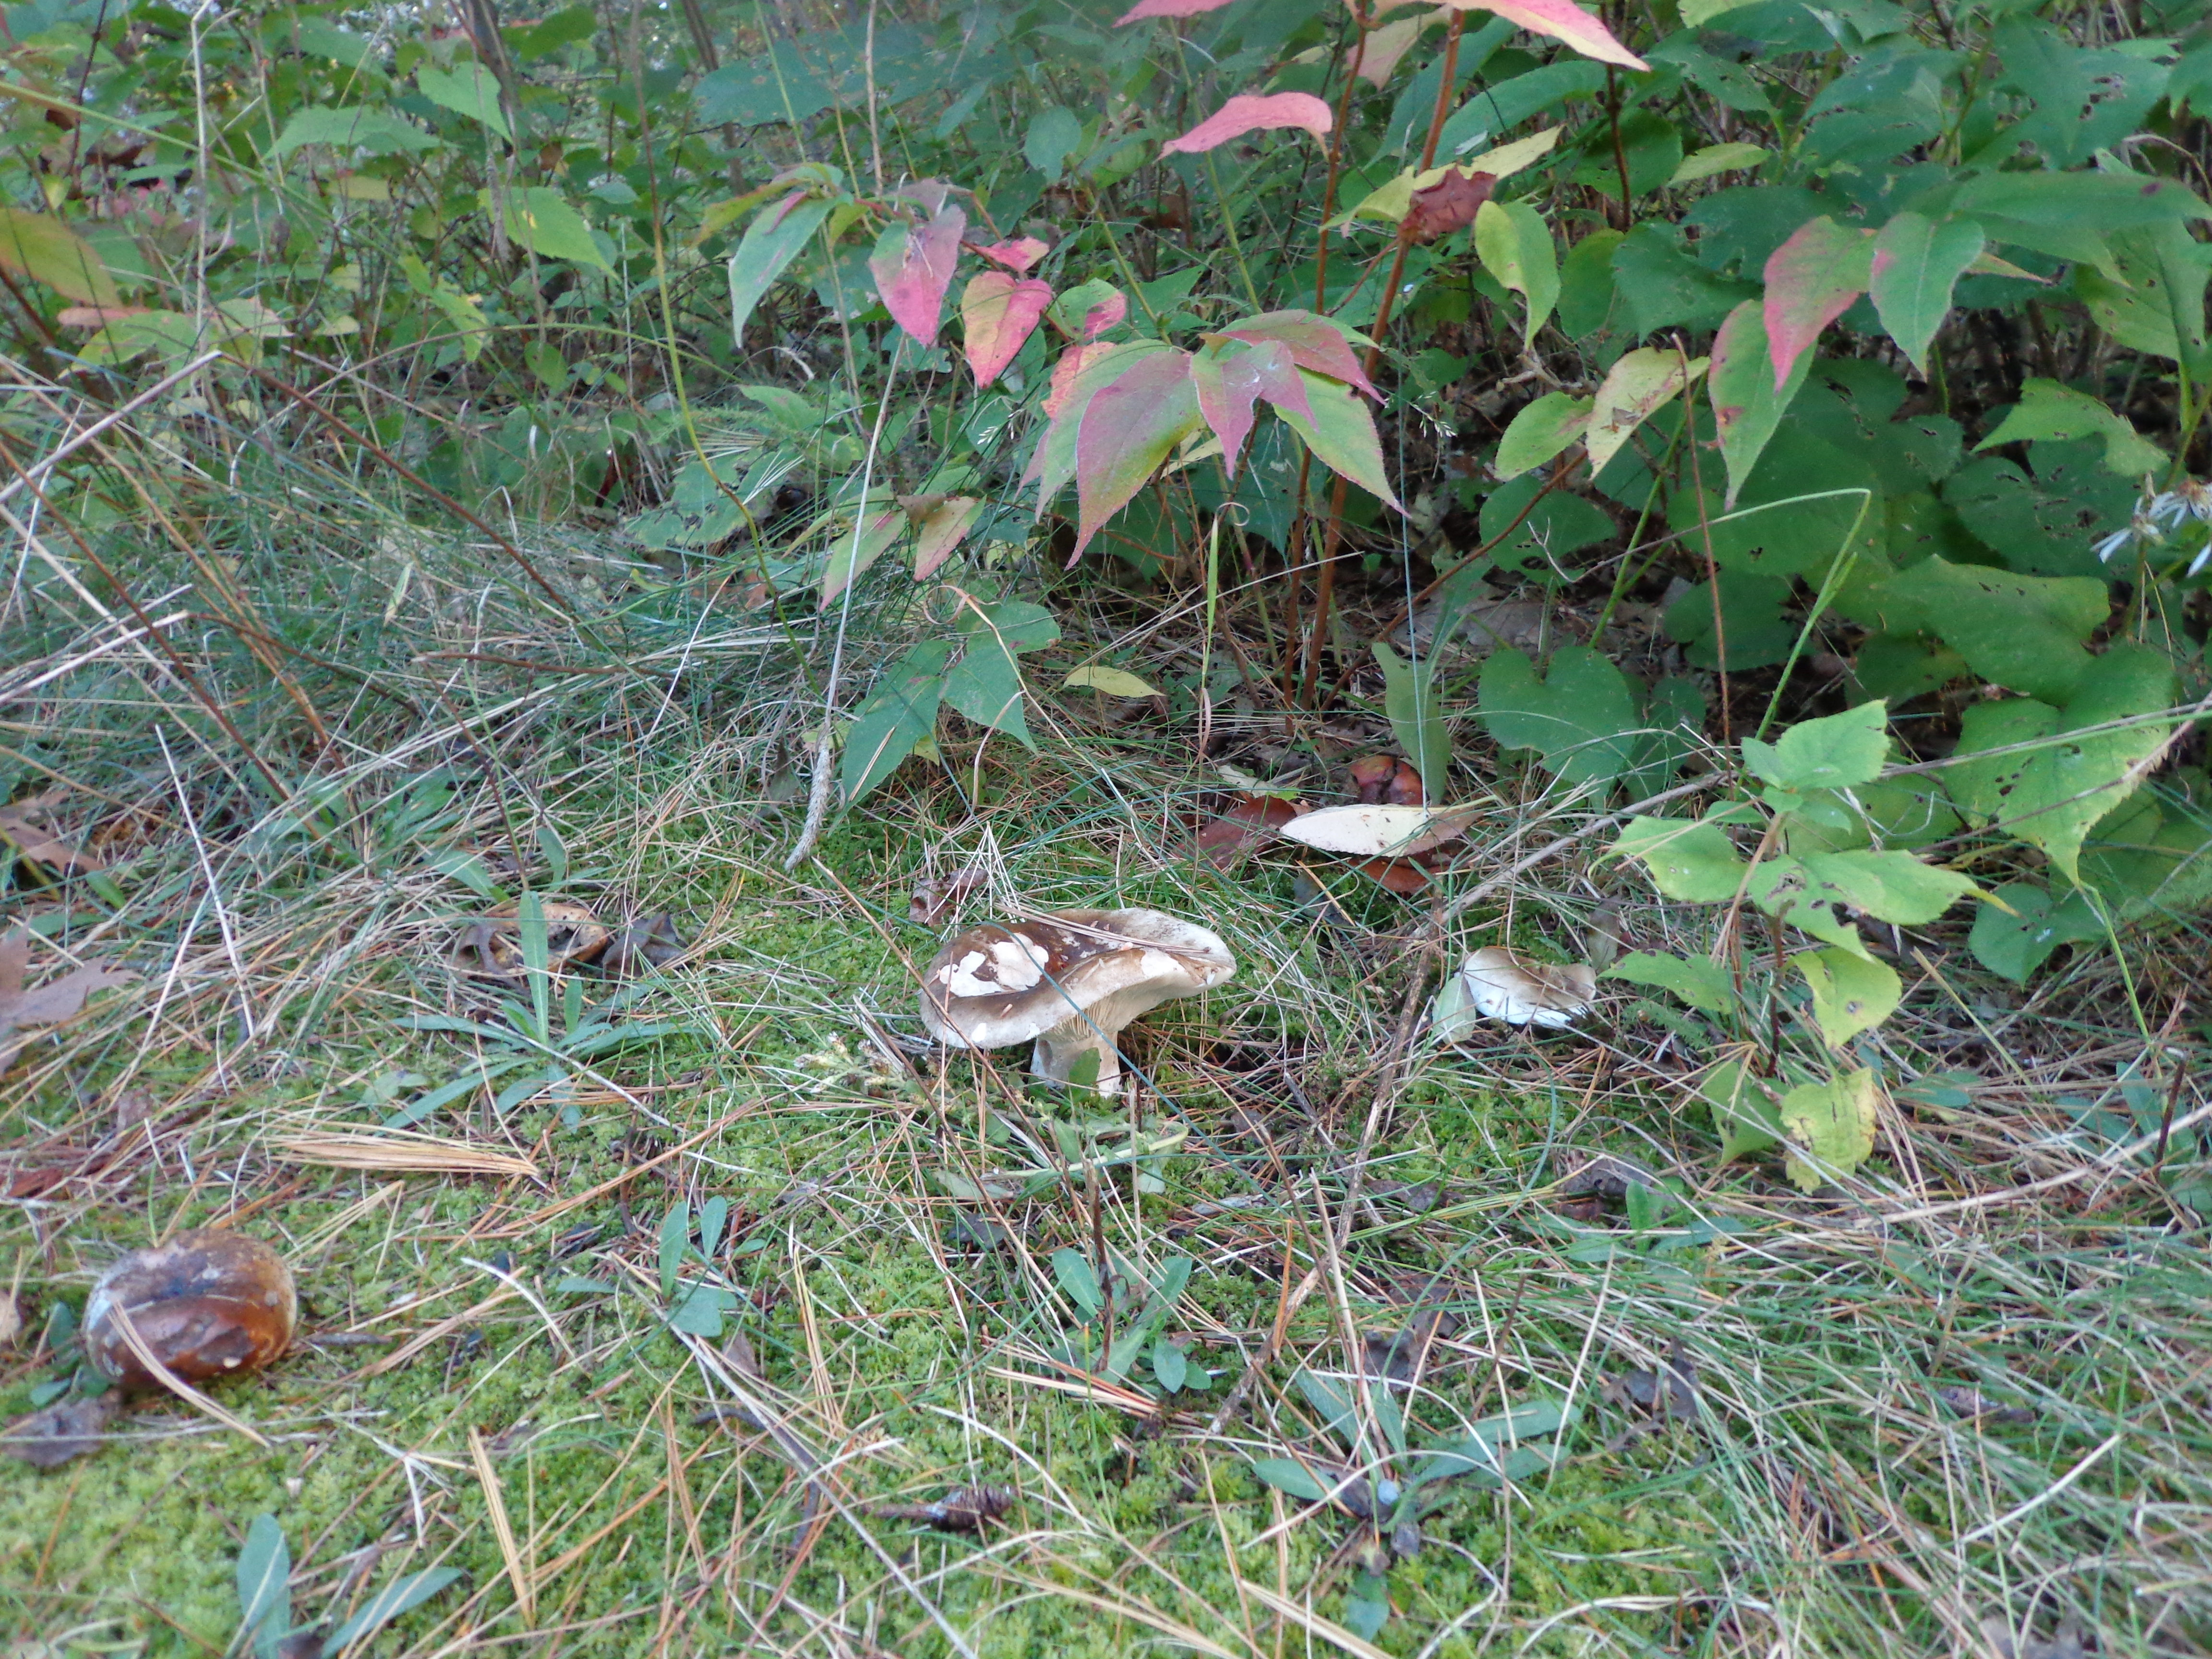 a stout sturdy mushroom